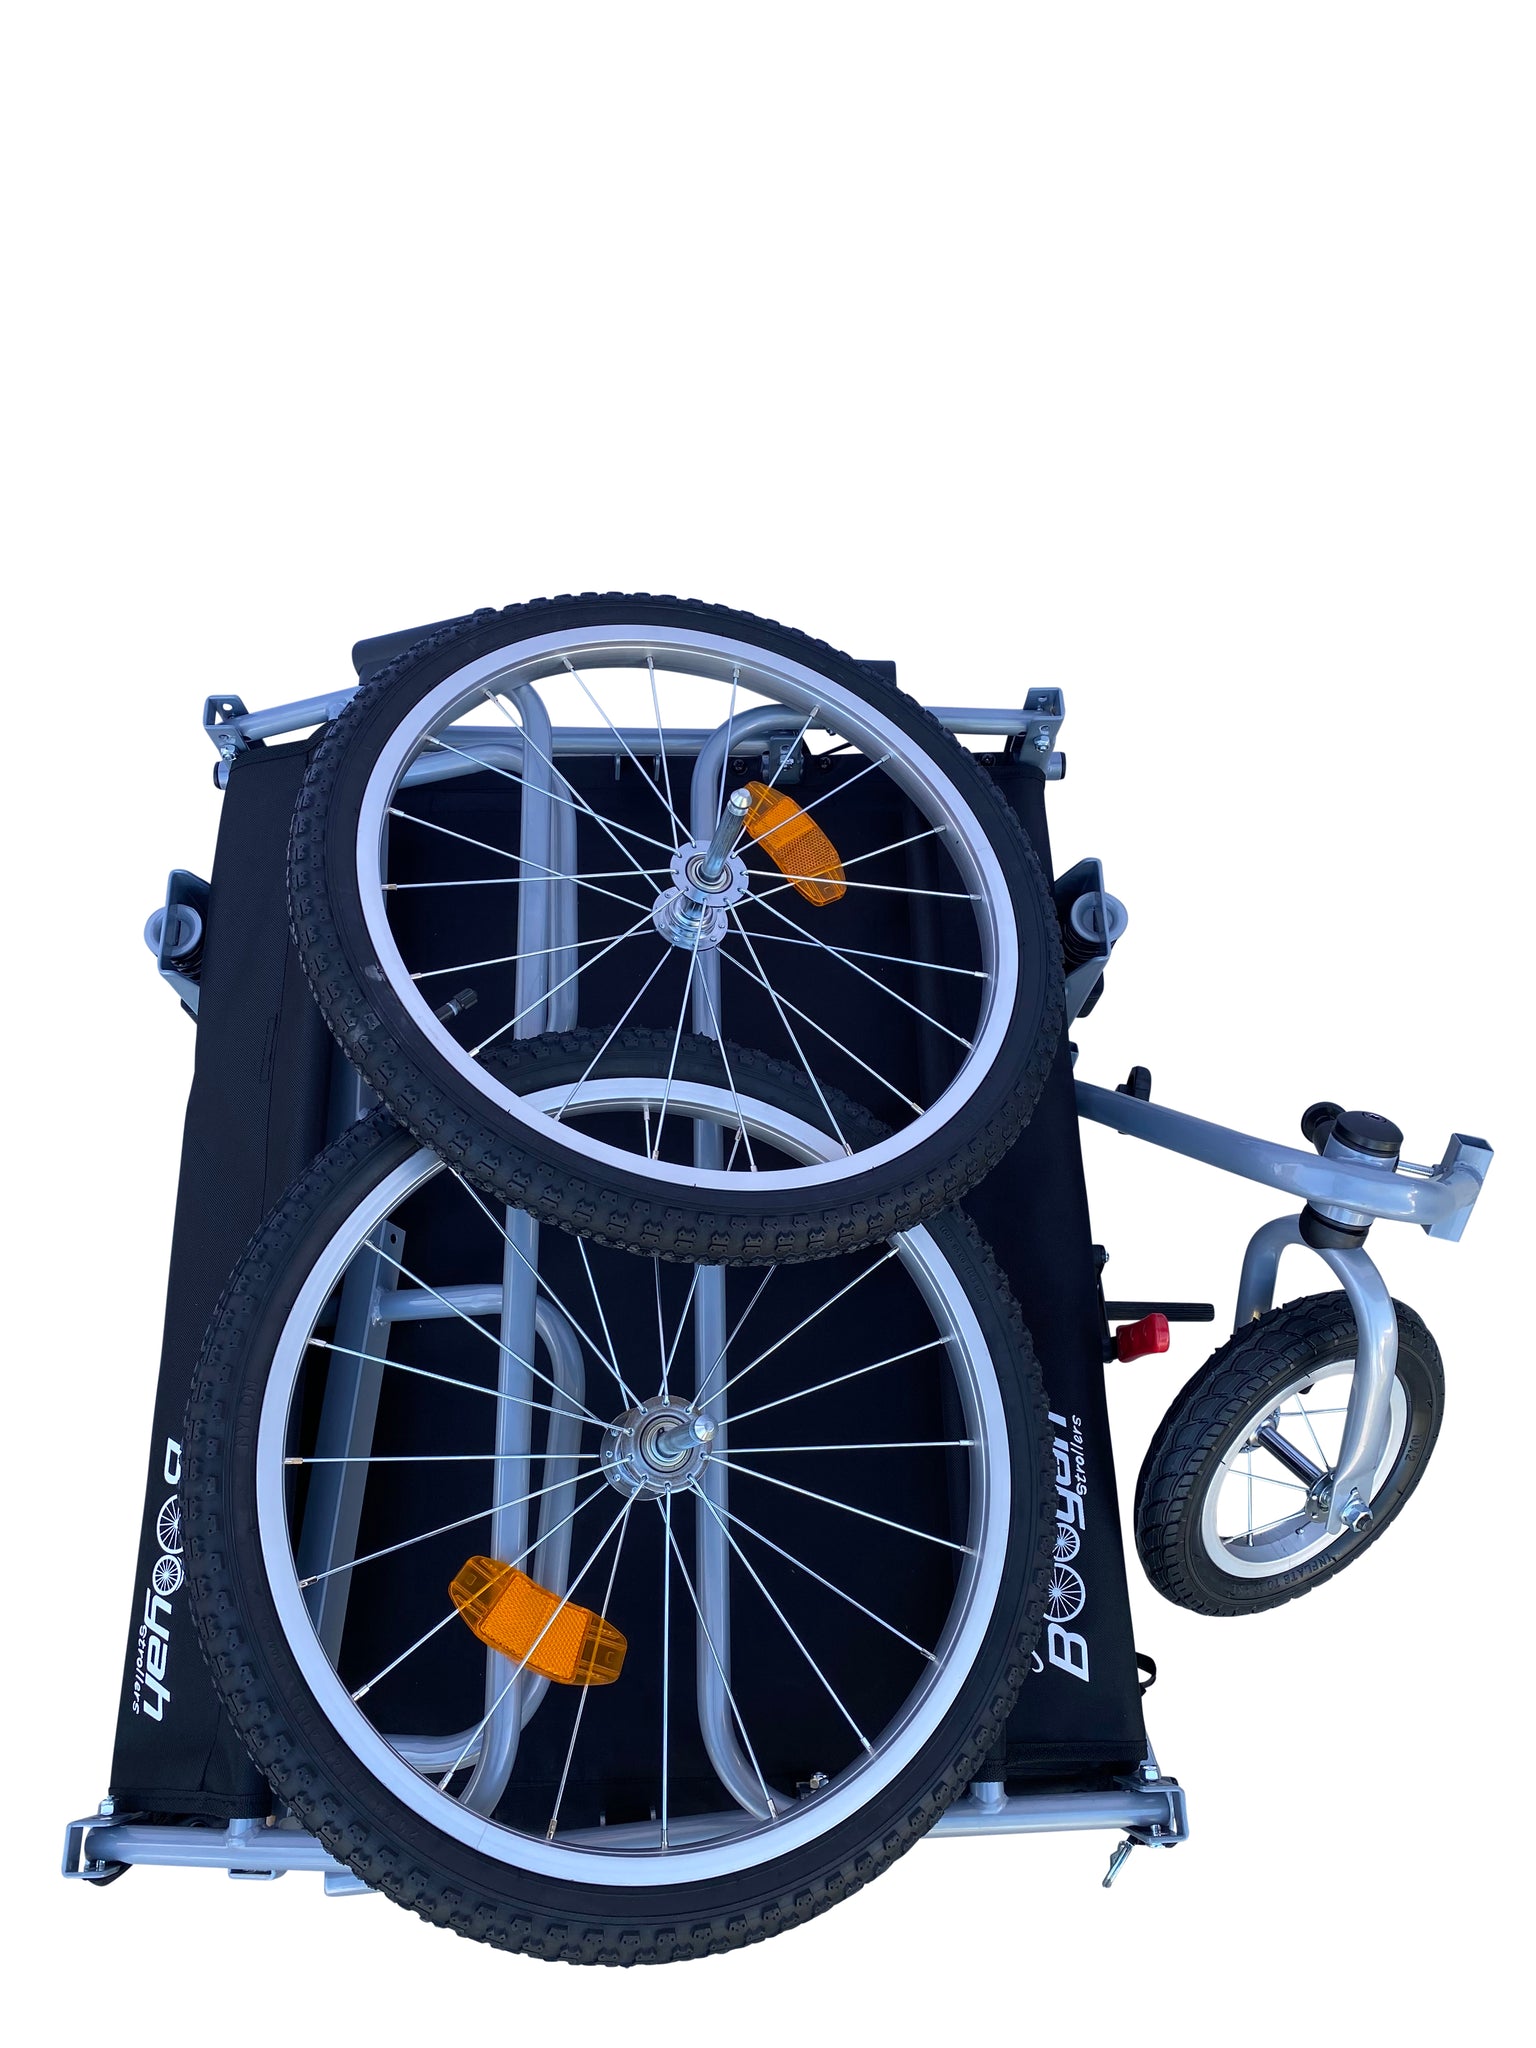 Bicycle Cart Wheels